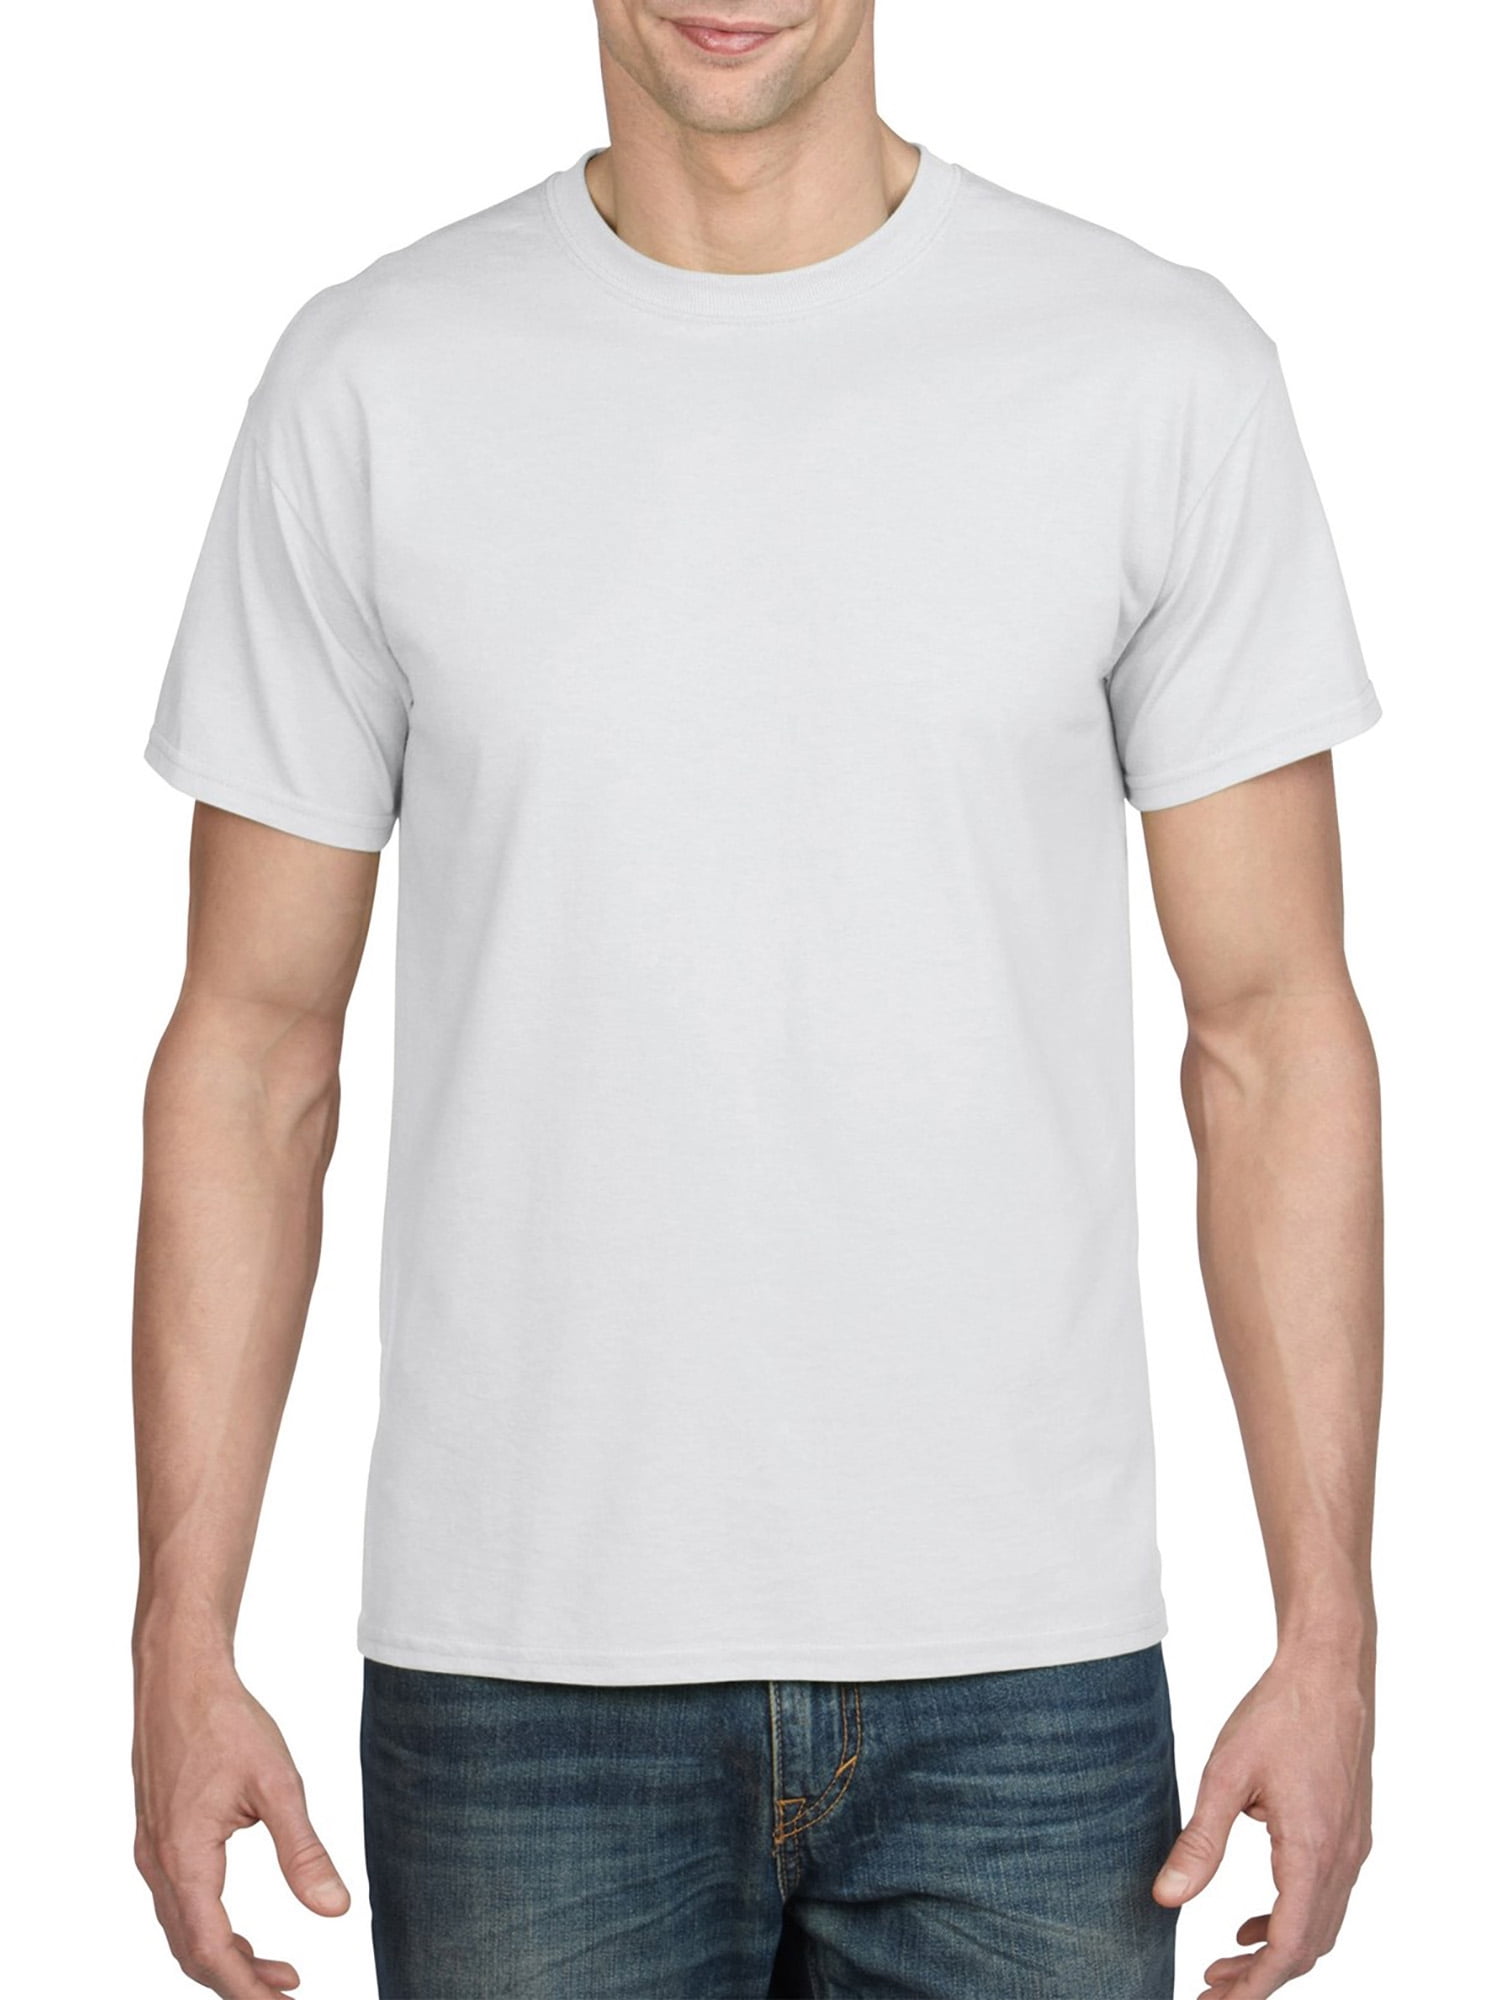 White Gildan Womens Preshrunk Seamless Crewneck T-Shirt XX-Large. Pack of 3